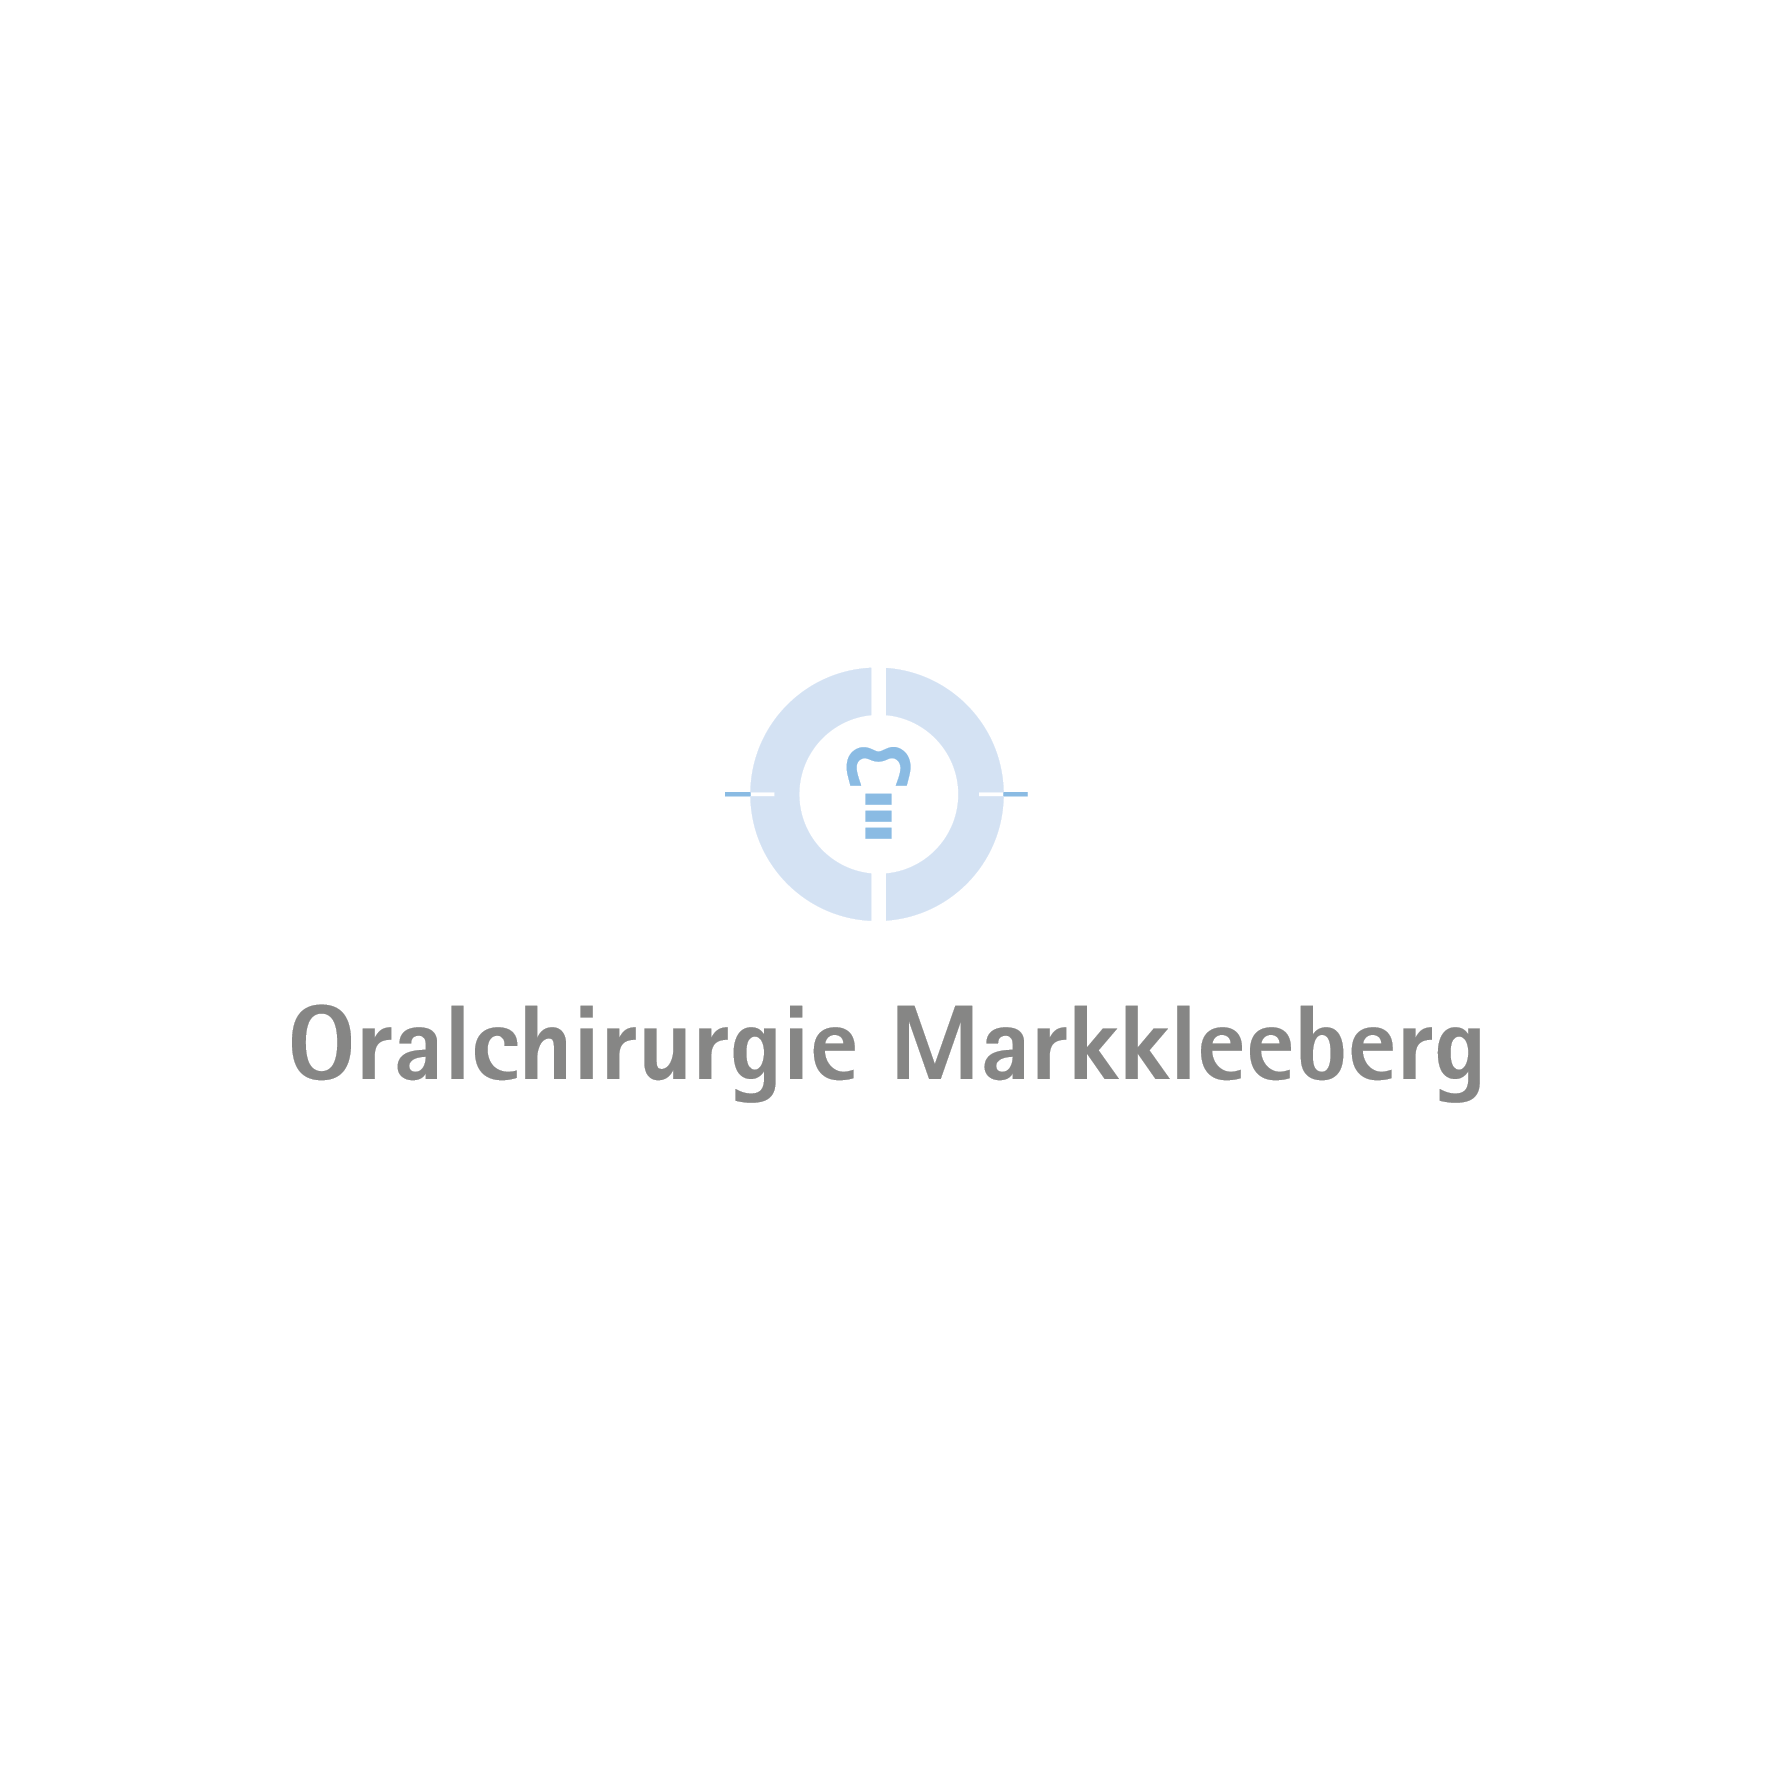 Oralchirurgie Markkleeberg